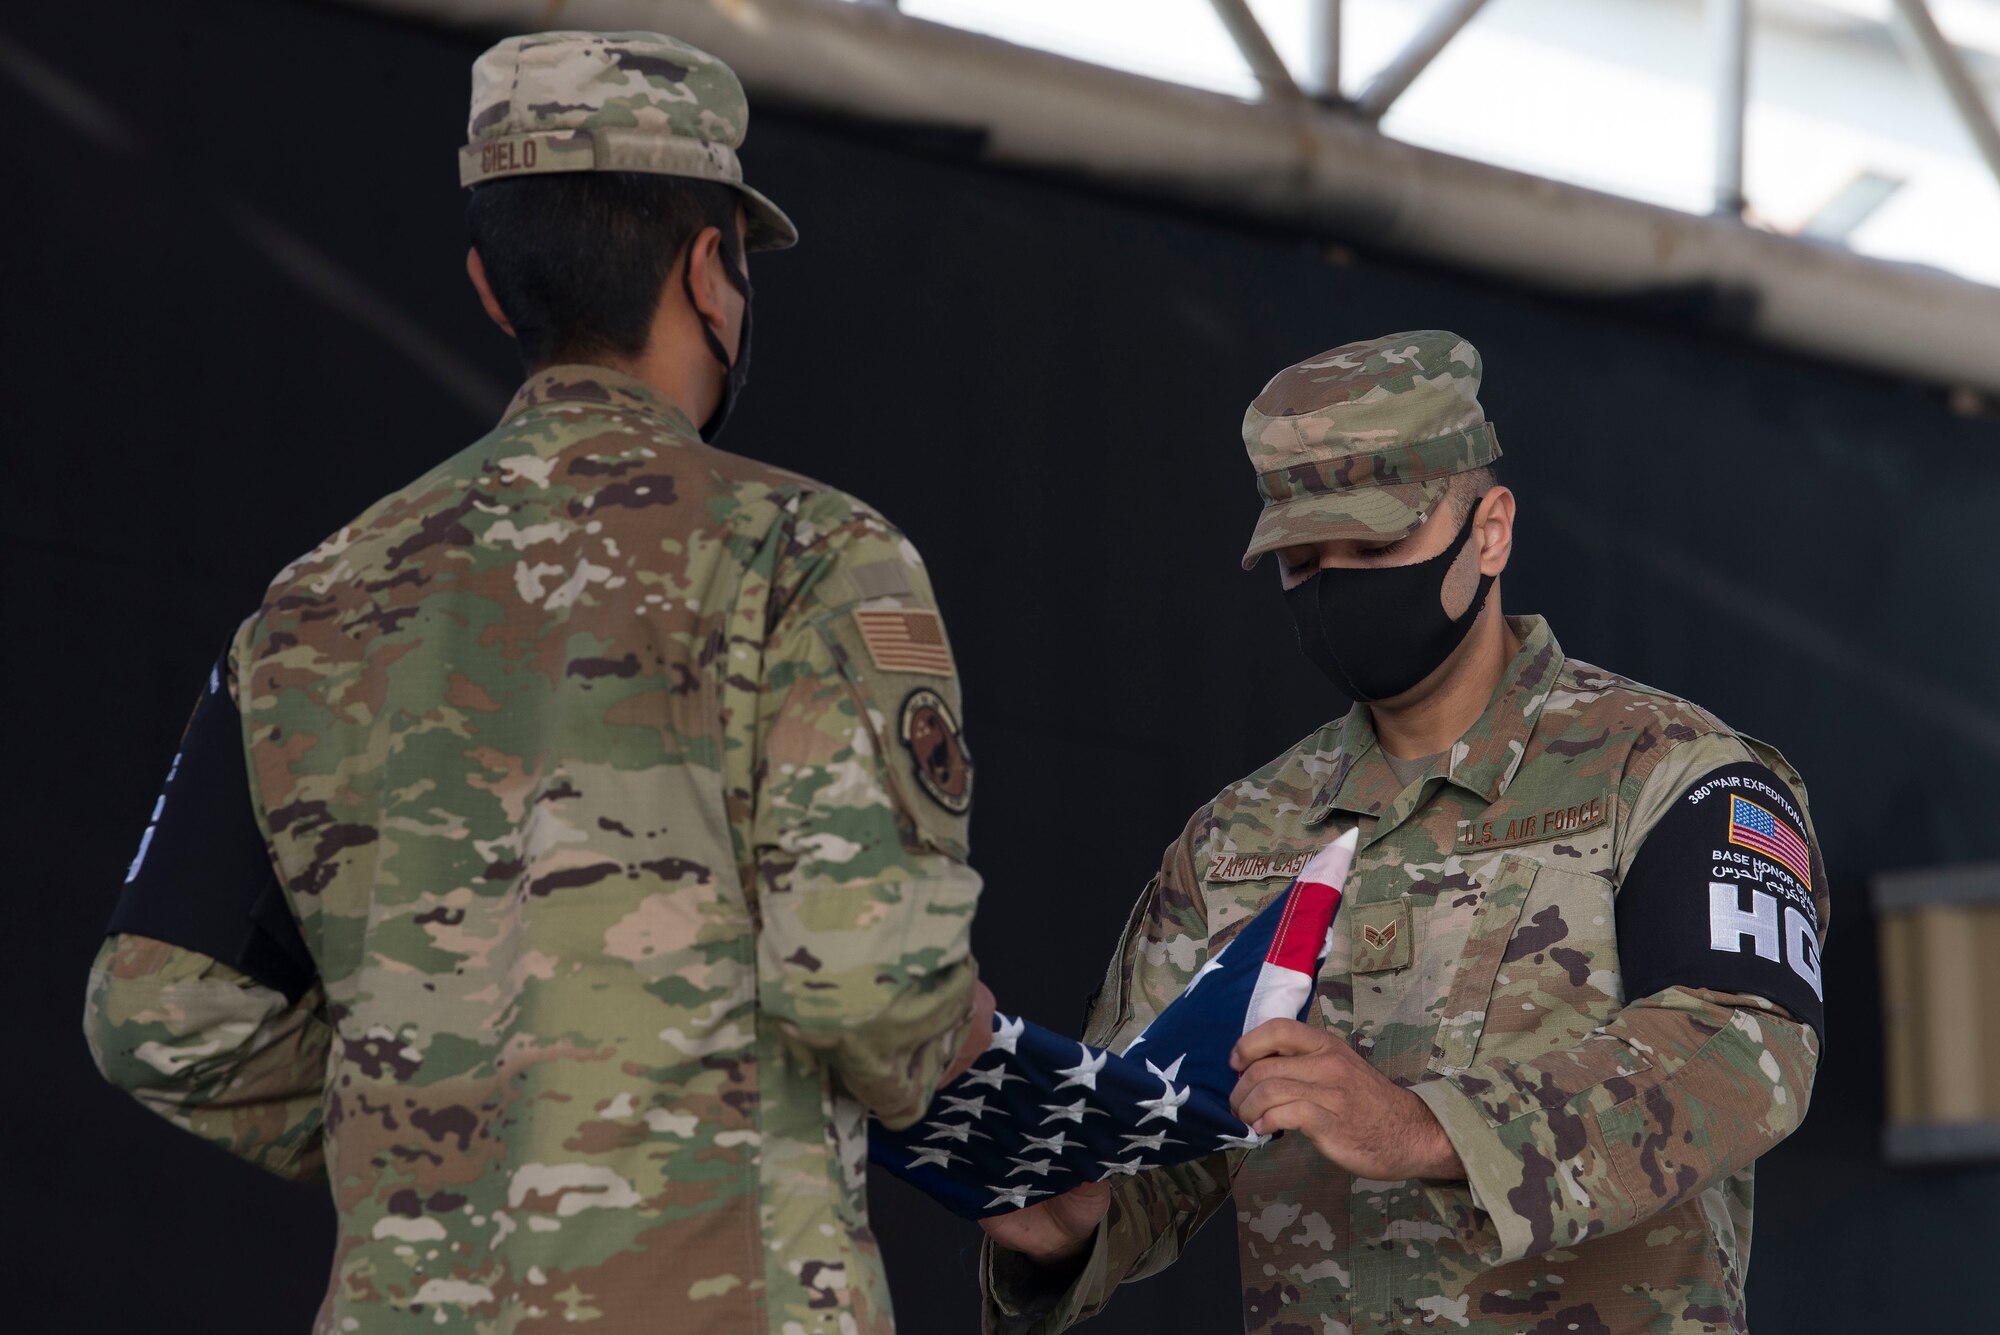 Senior Airman May Zamora Castillo folds a U.S. flag during a ceremony.